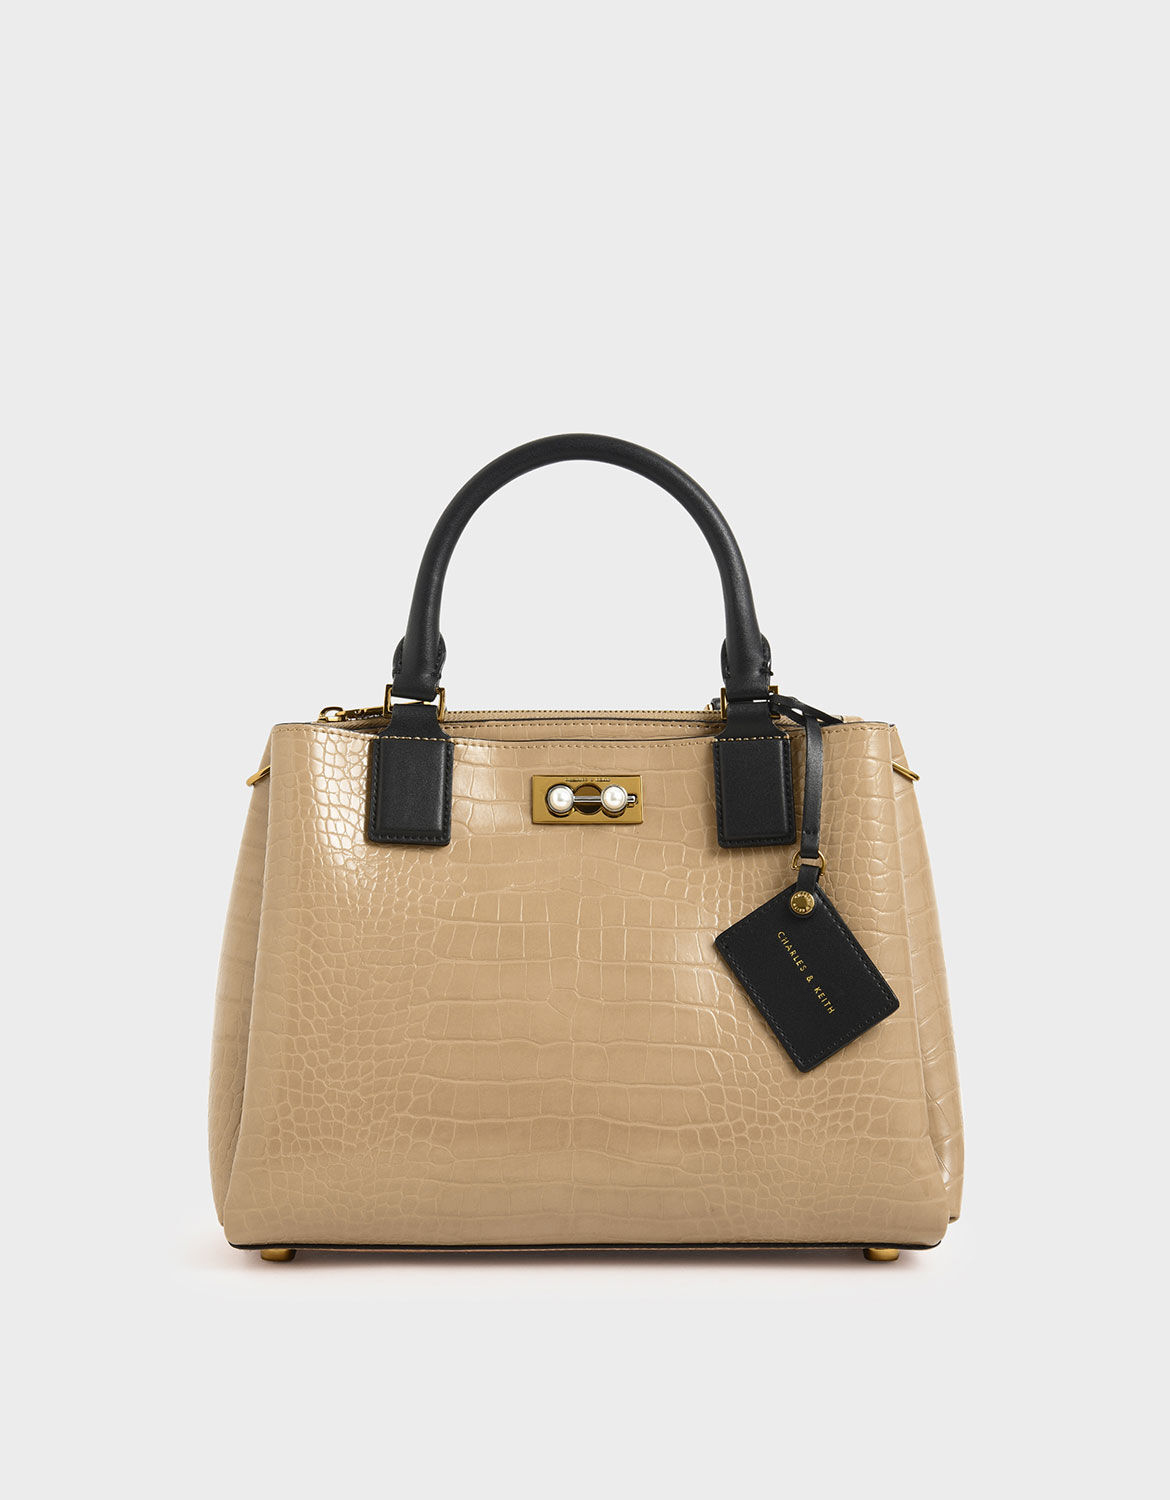 structured handbag charles and keith